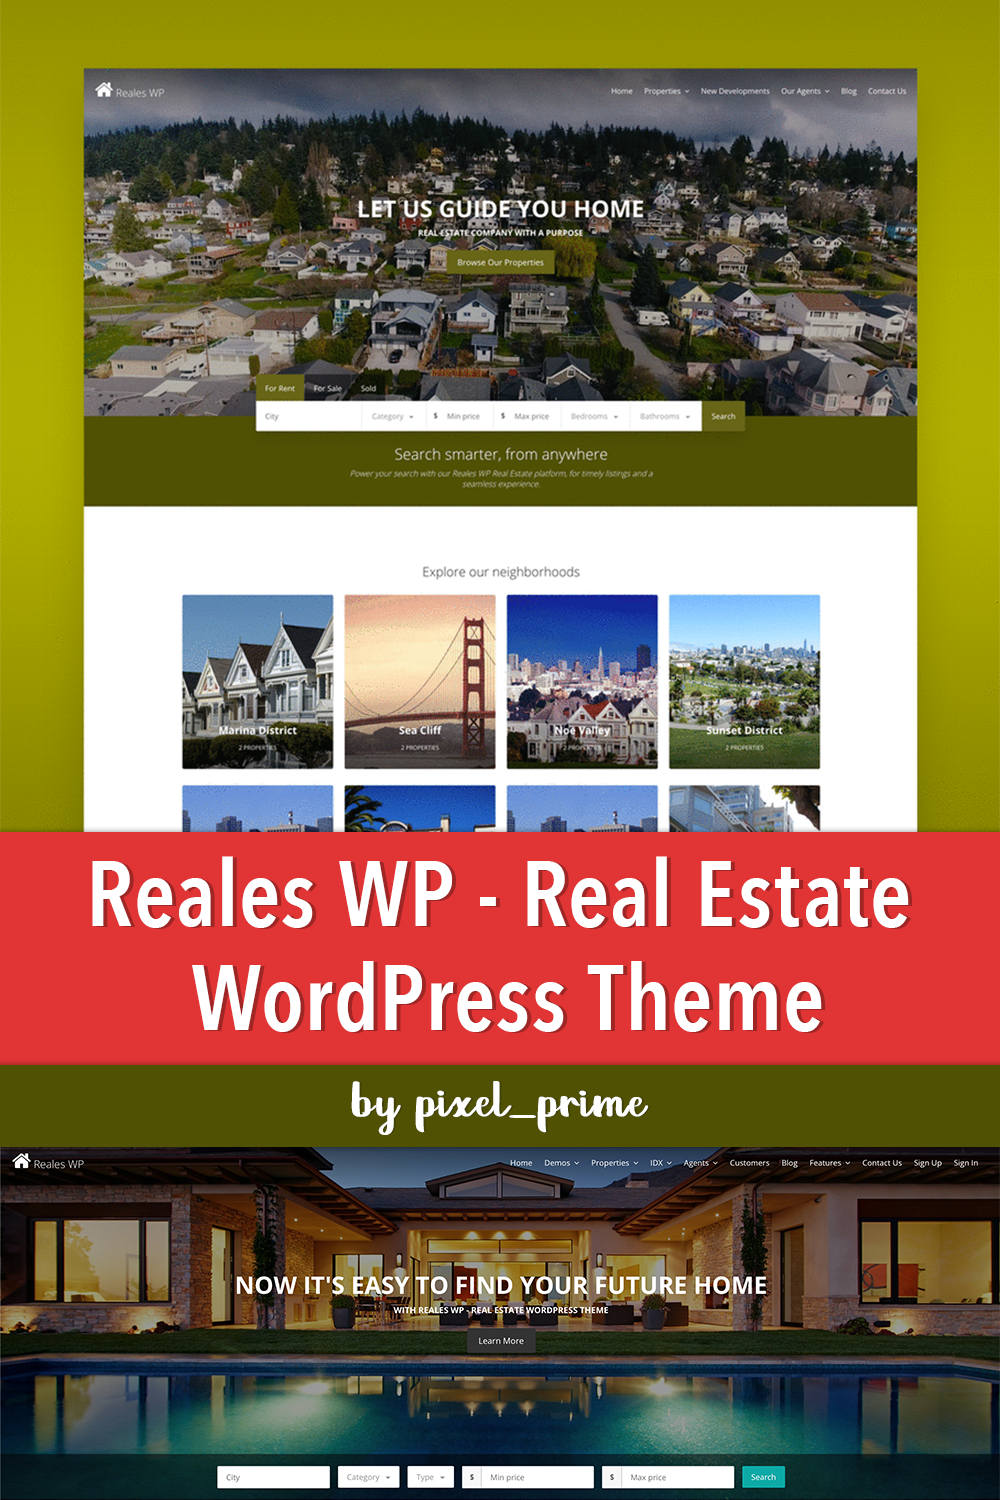 Illustrations reales wp real estate wordpress theme of pinterest.